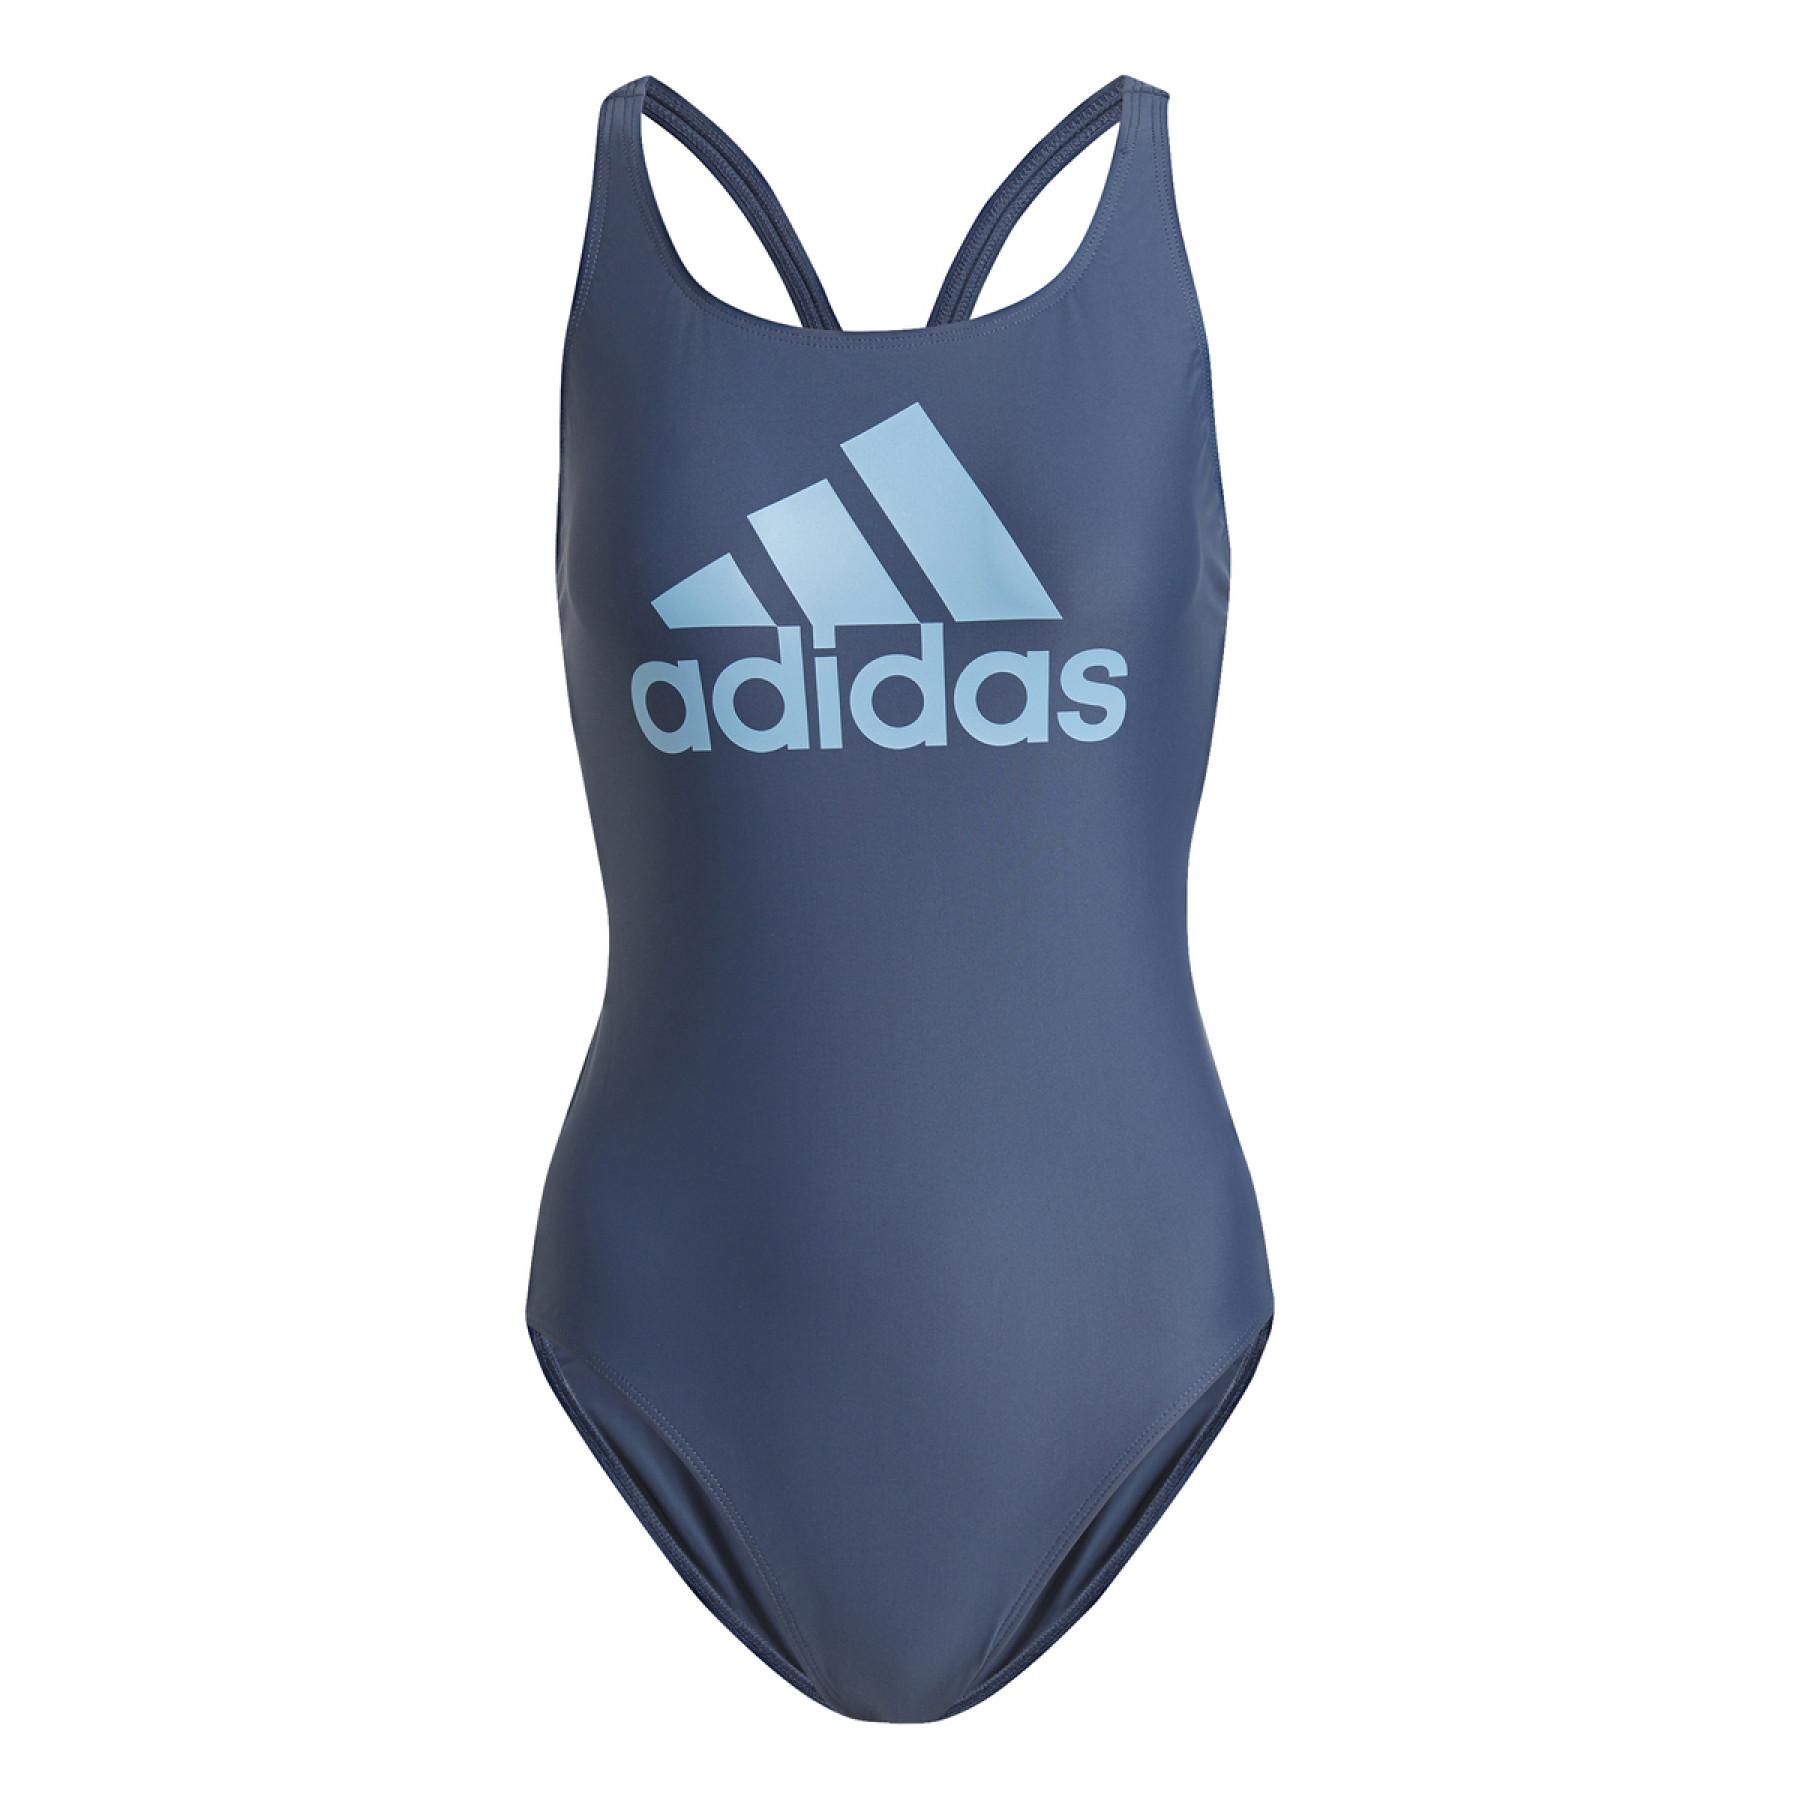 Women's swimsuit adidas SH3.RO Big Logo